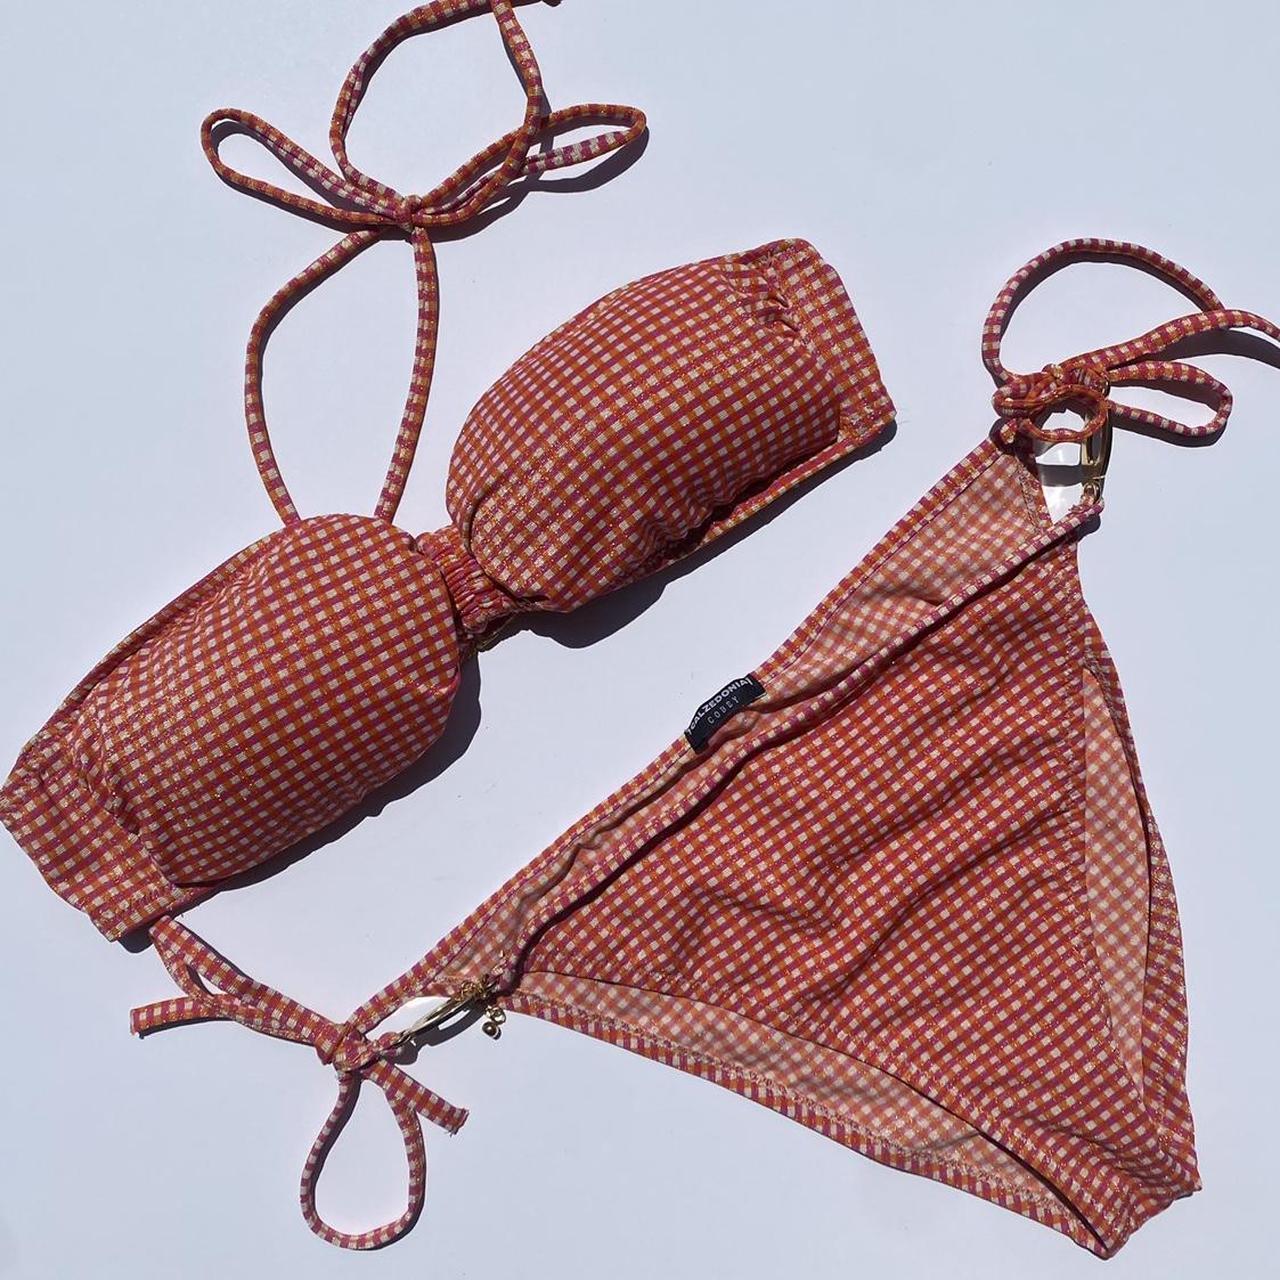 Calzedonia Women's Orange and Pink Bikinis-and-tankini-sets (2)